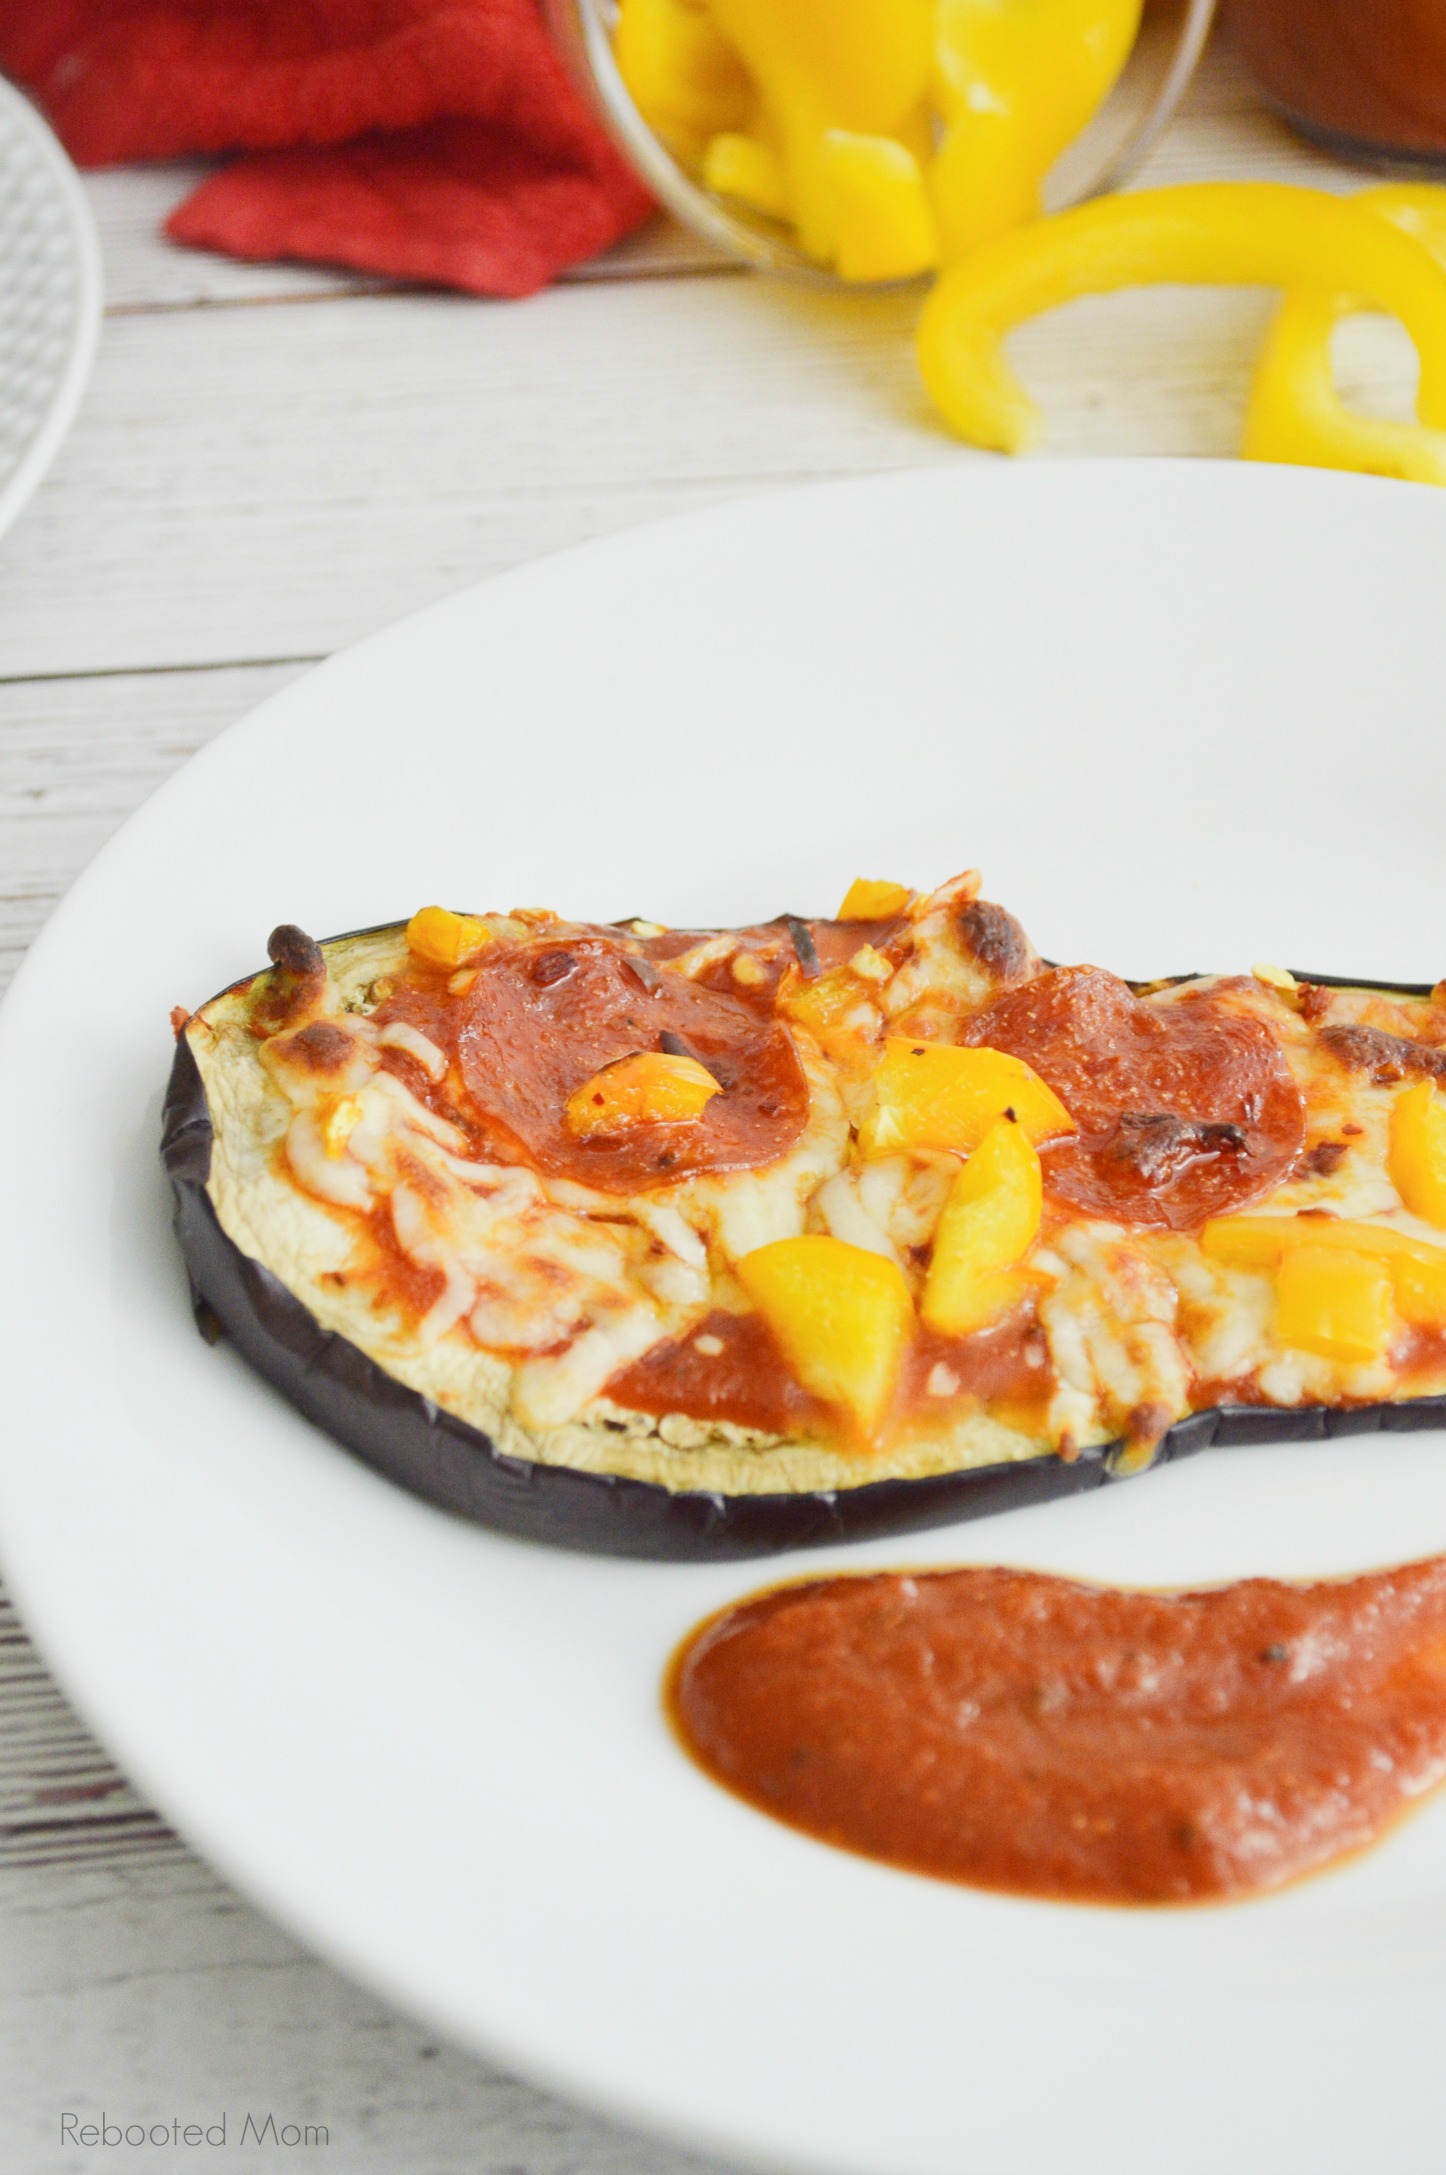 Air Fryer Eggplant Pizza Slices